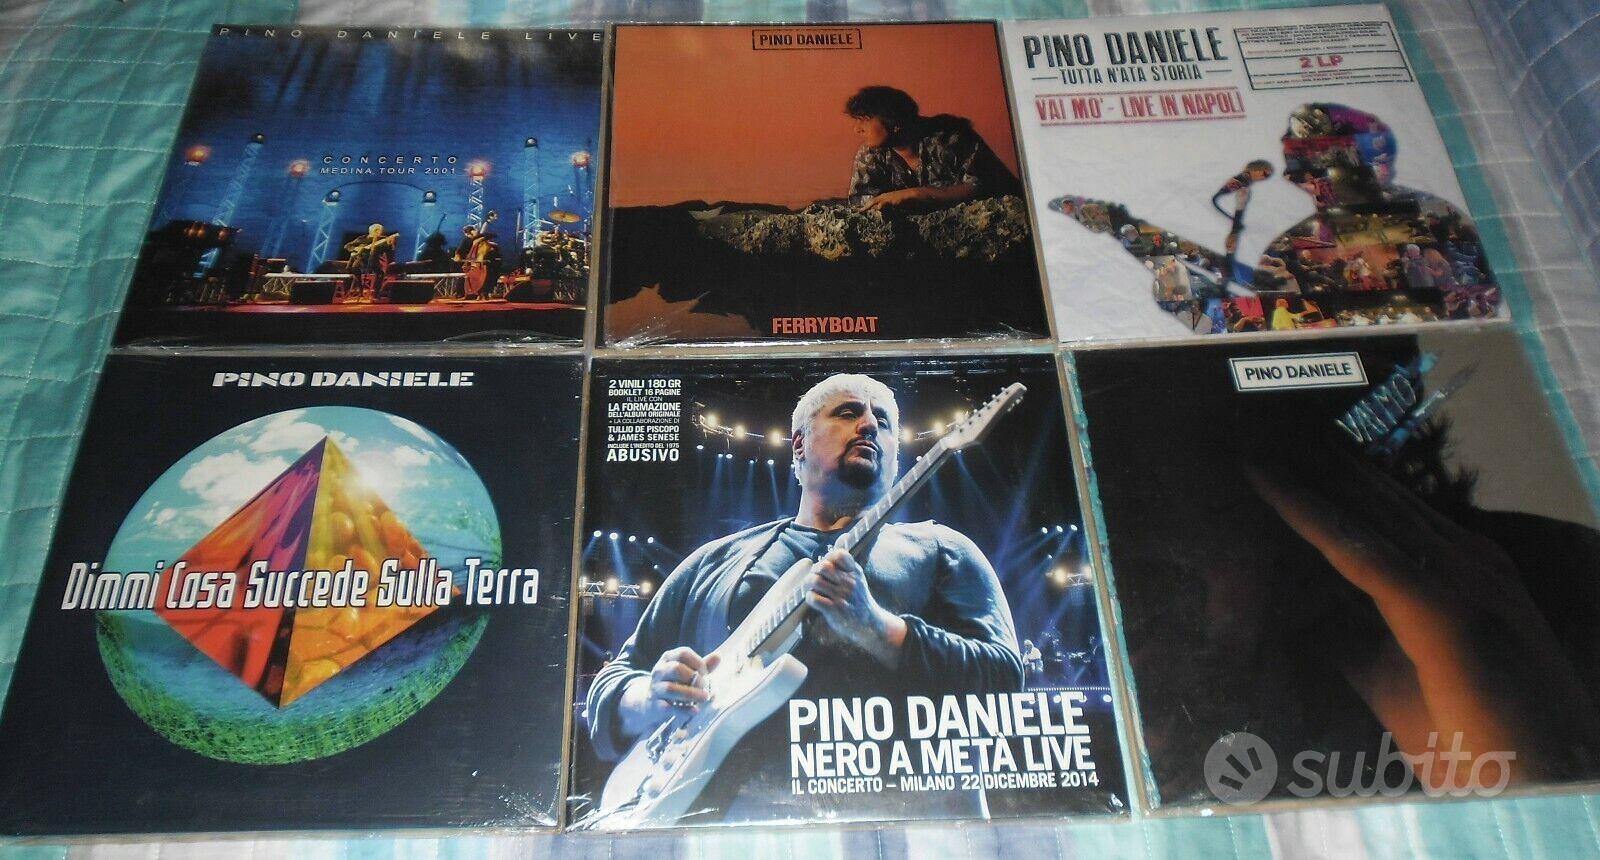 Terra Mia, Vinili e Album Pino Daniele